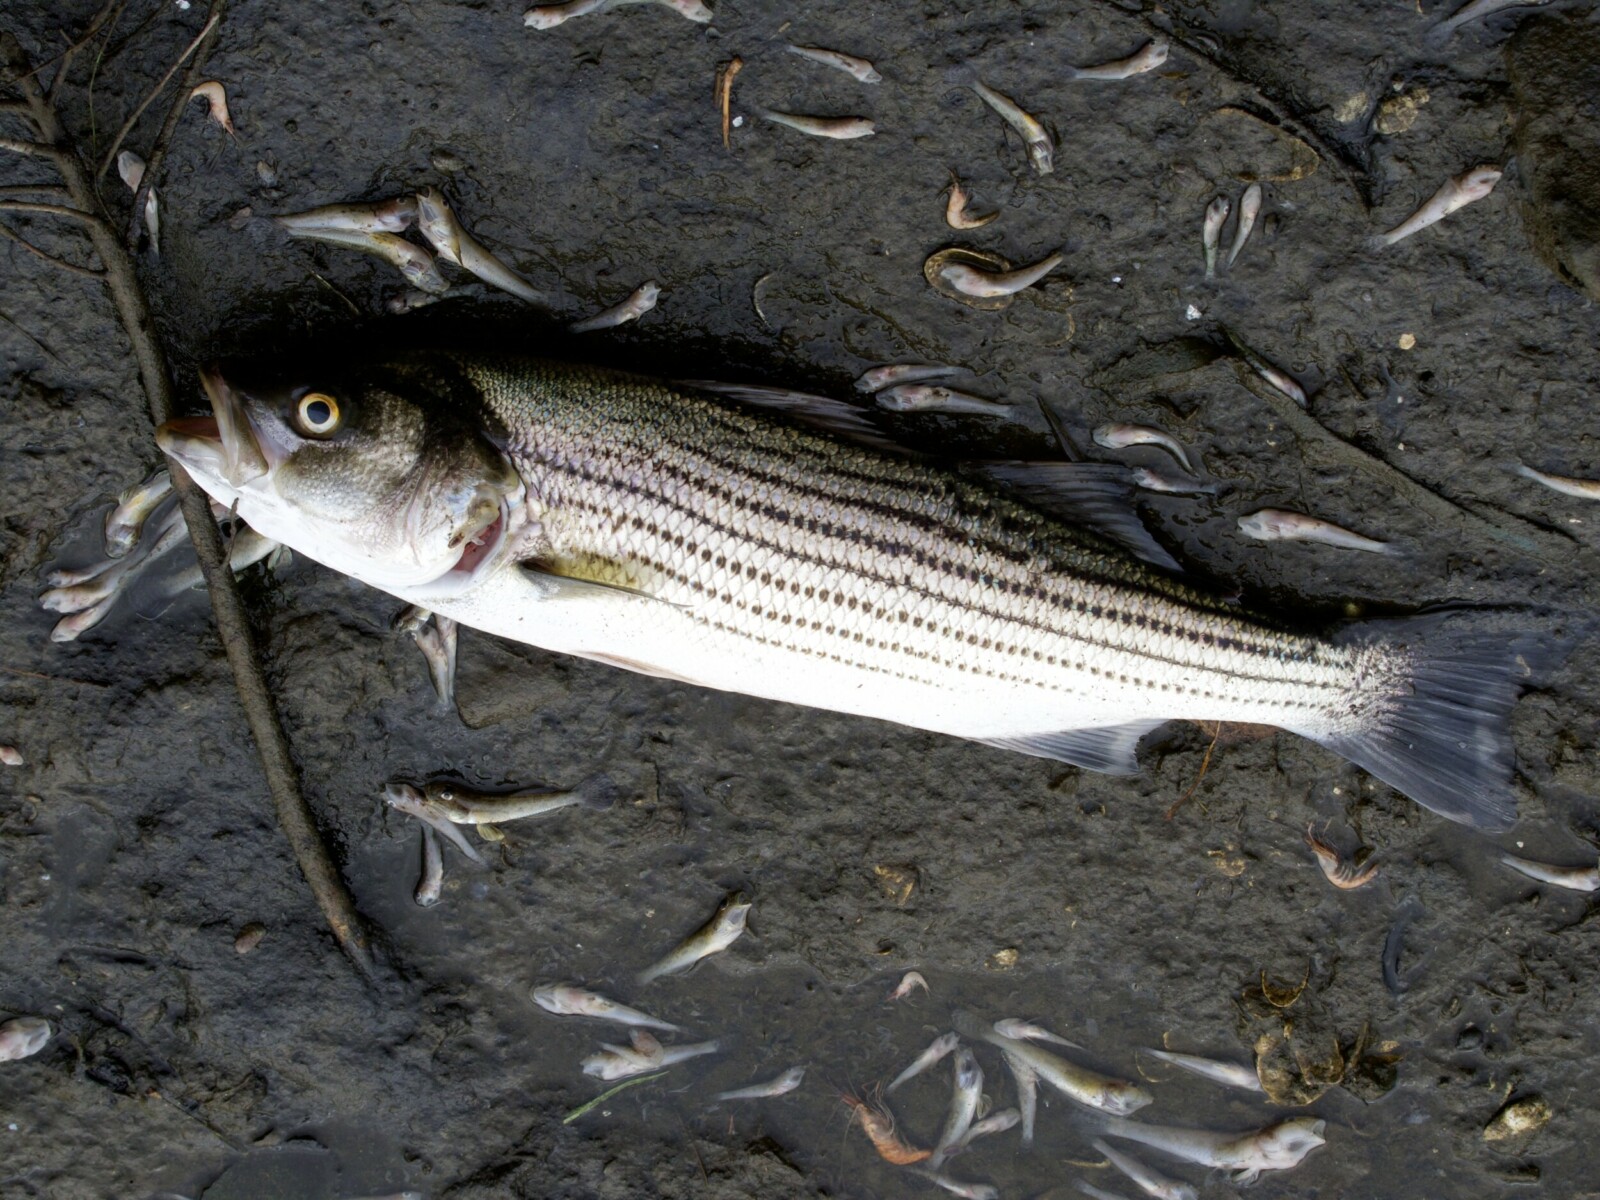 Dead Striped Bass at Lake Merritt